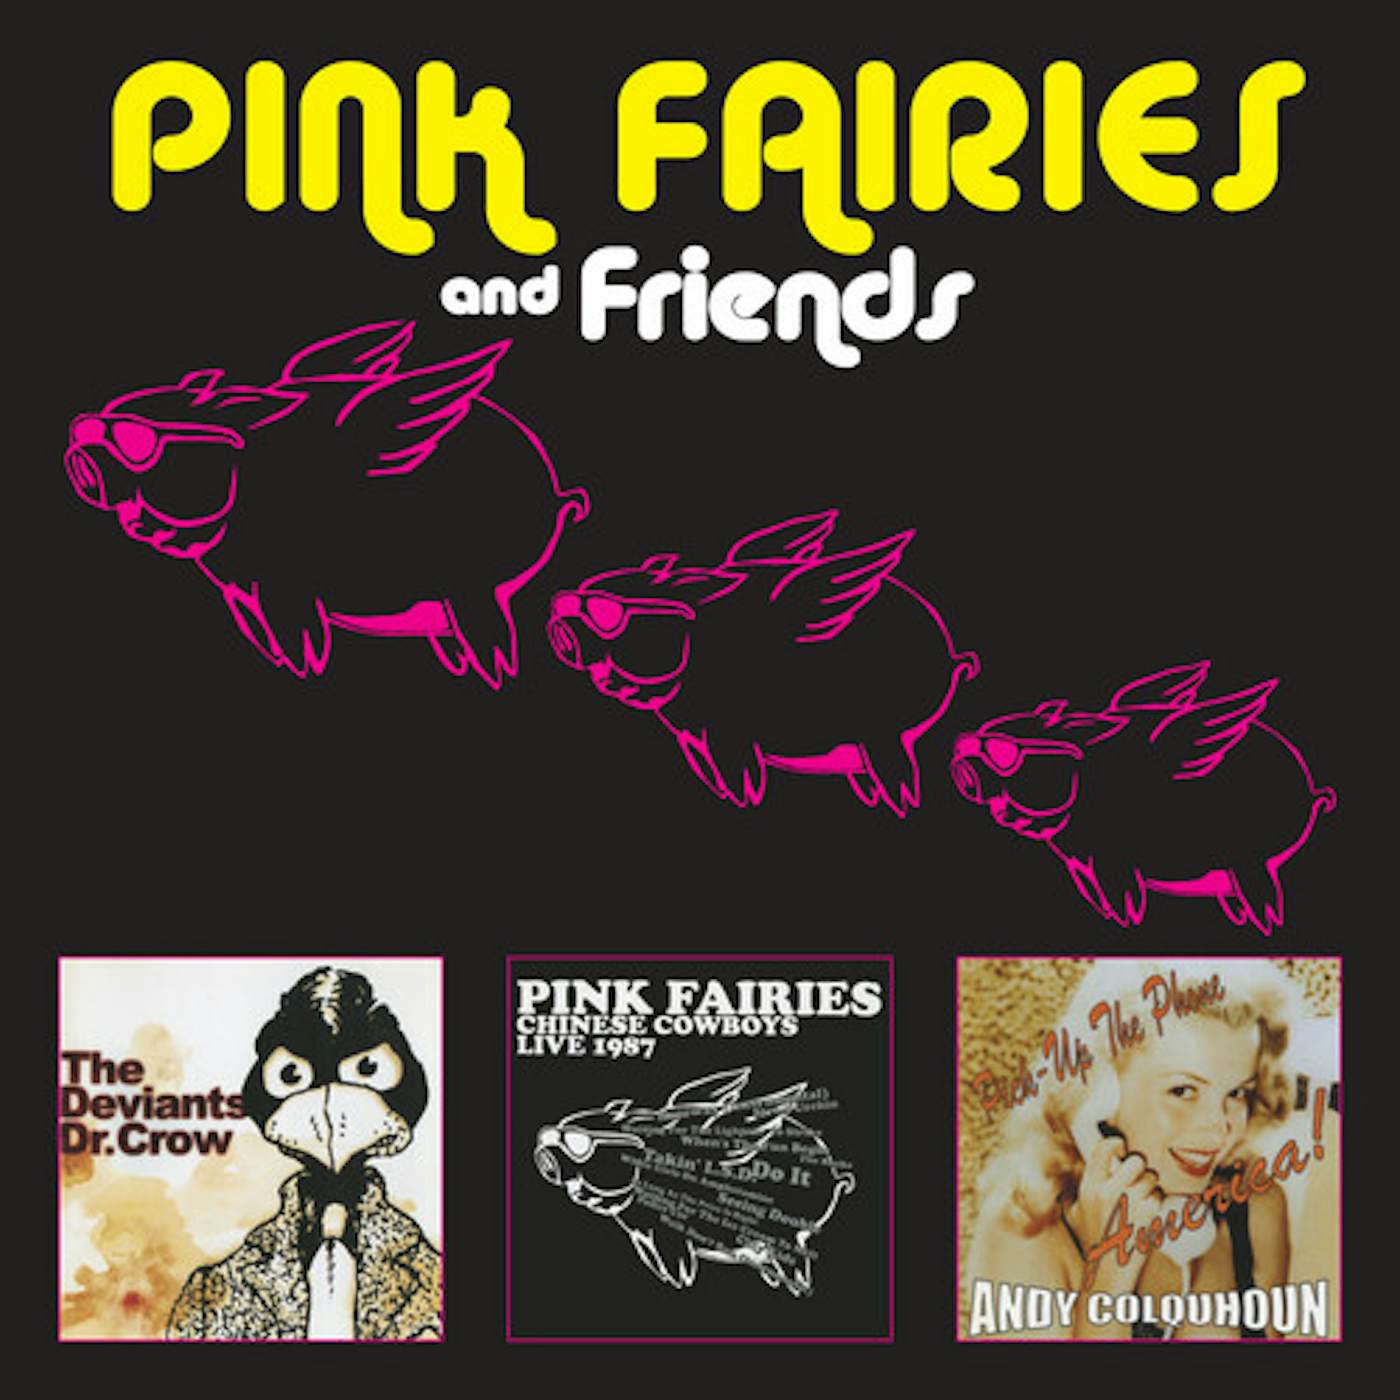 The Pink Fairies & FRIENDS CD